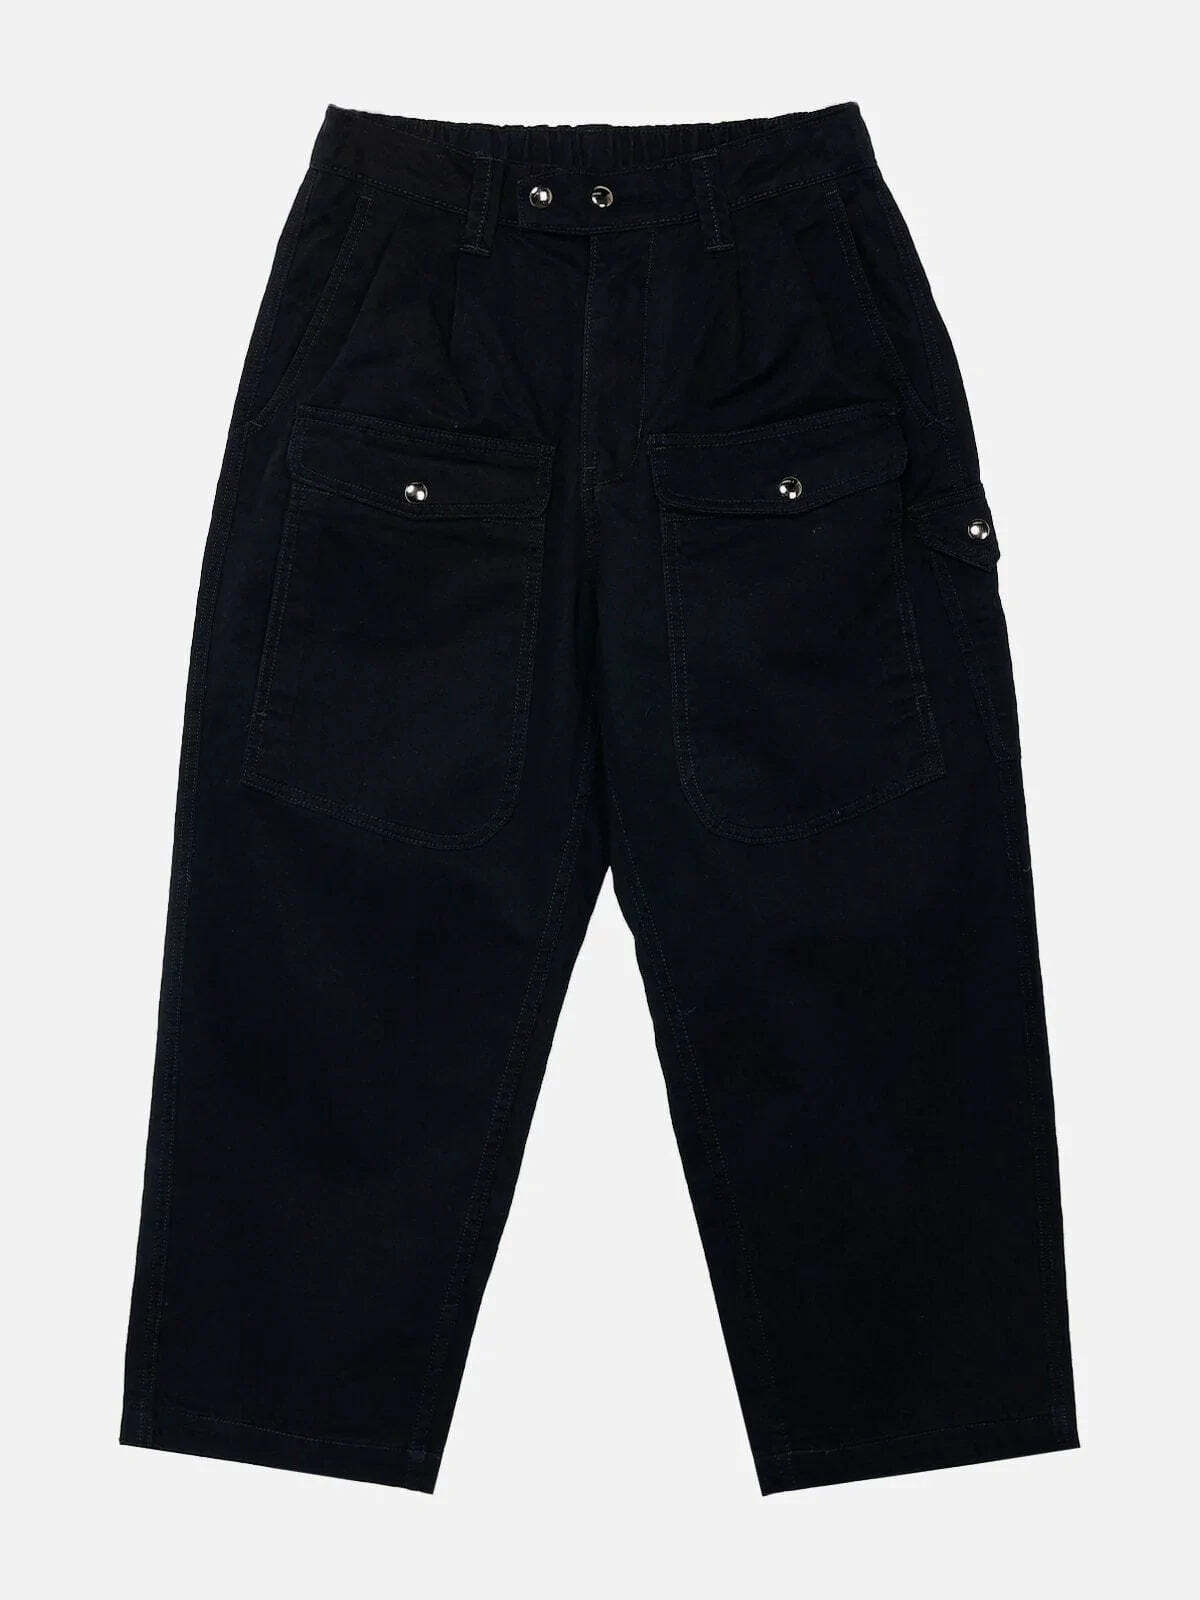 solid button pants sleek & urban streetwear 4281